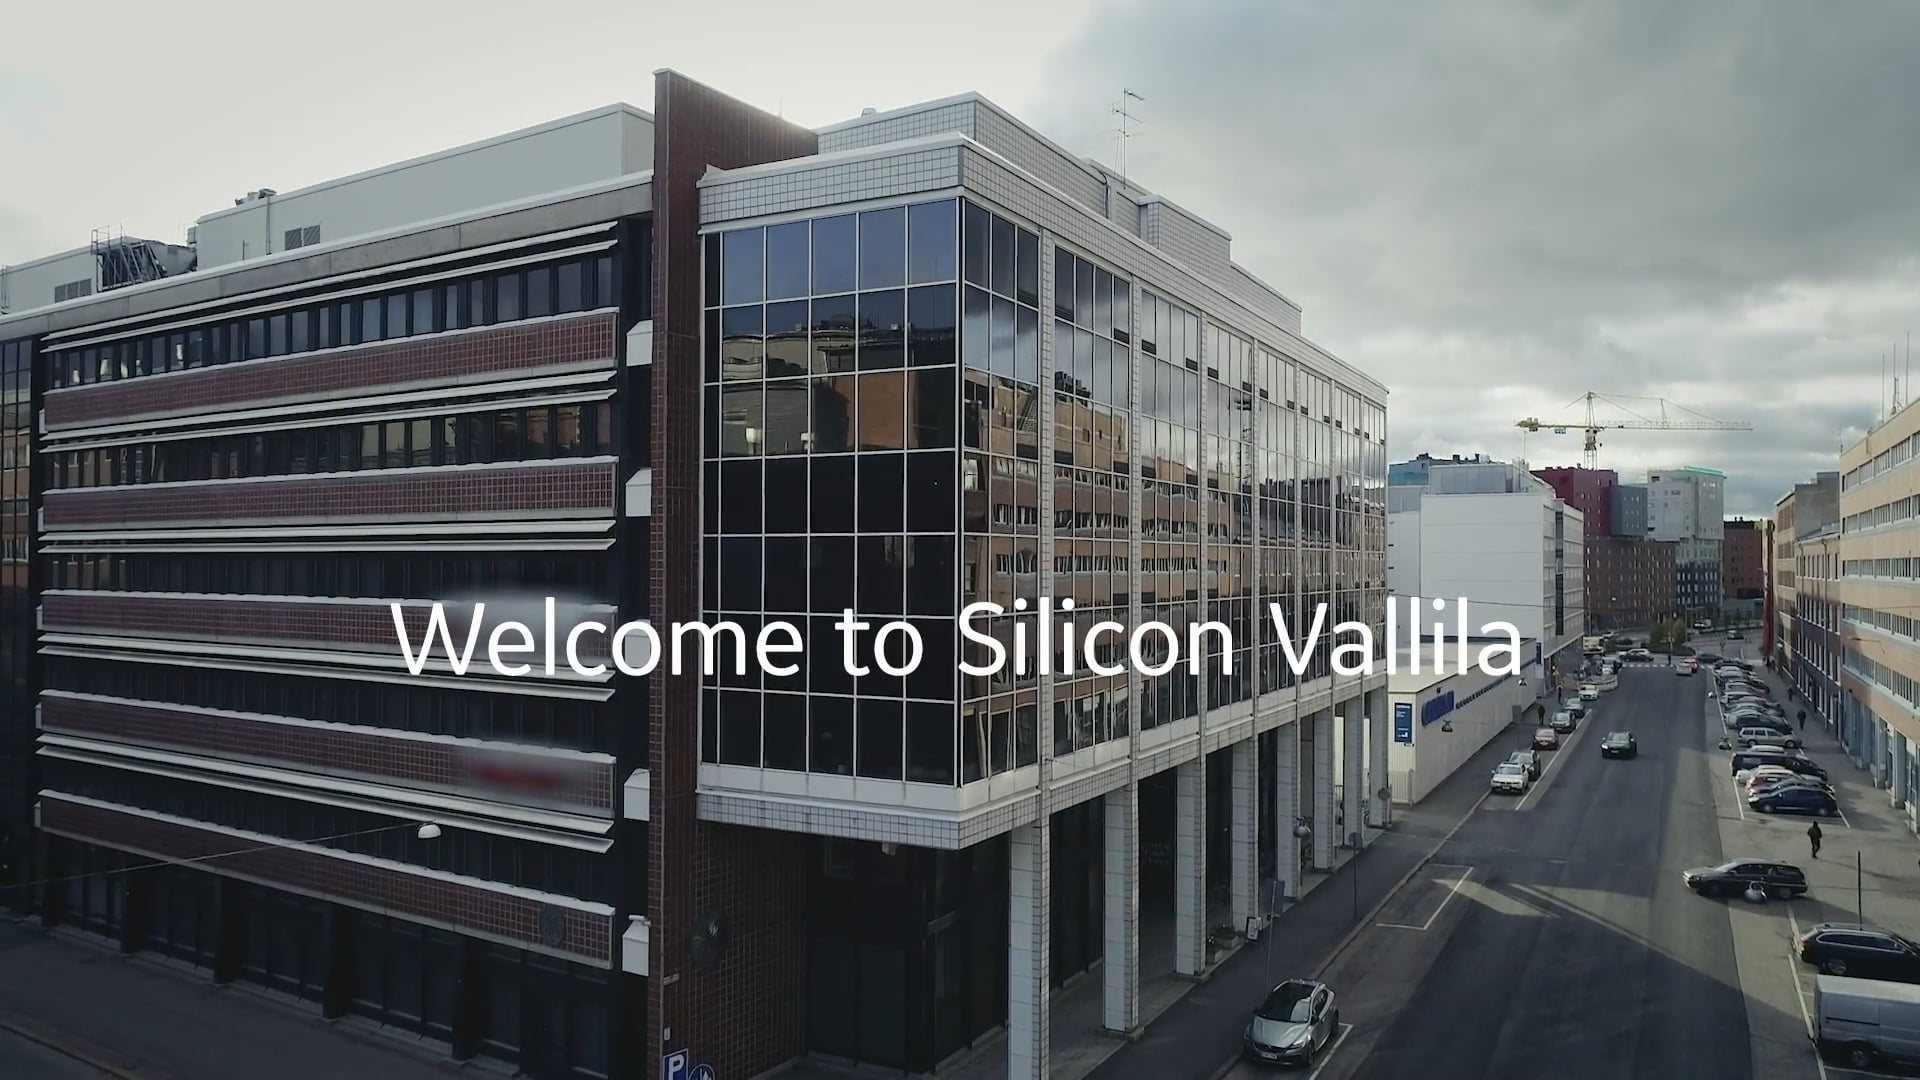 GE Healthcare Finland - Silicon Vallila on Vimeo